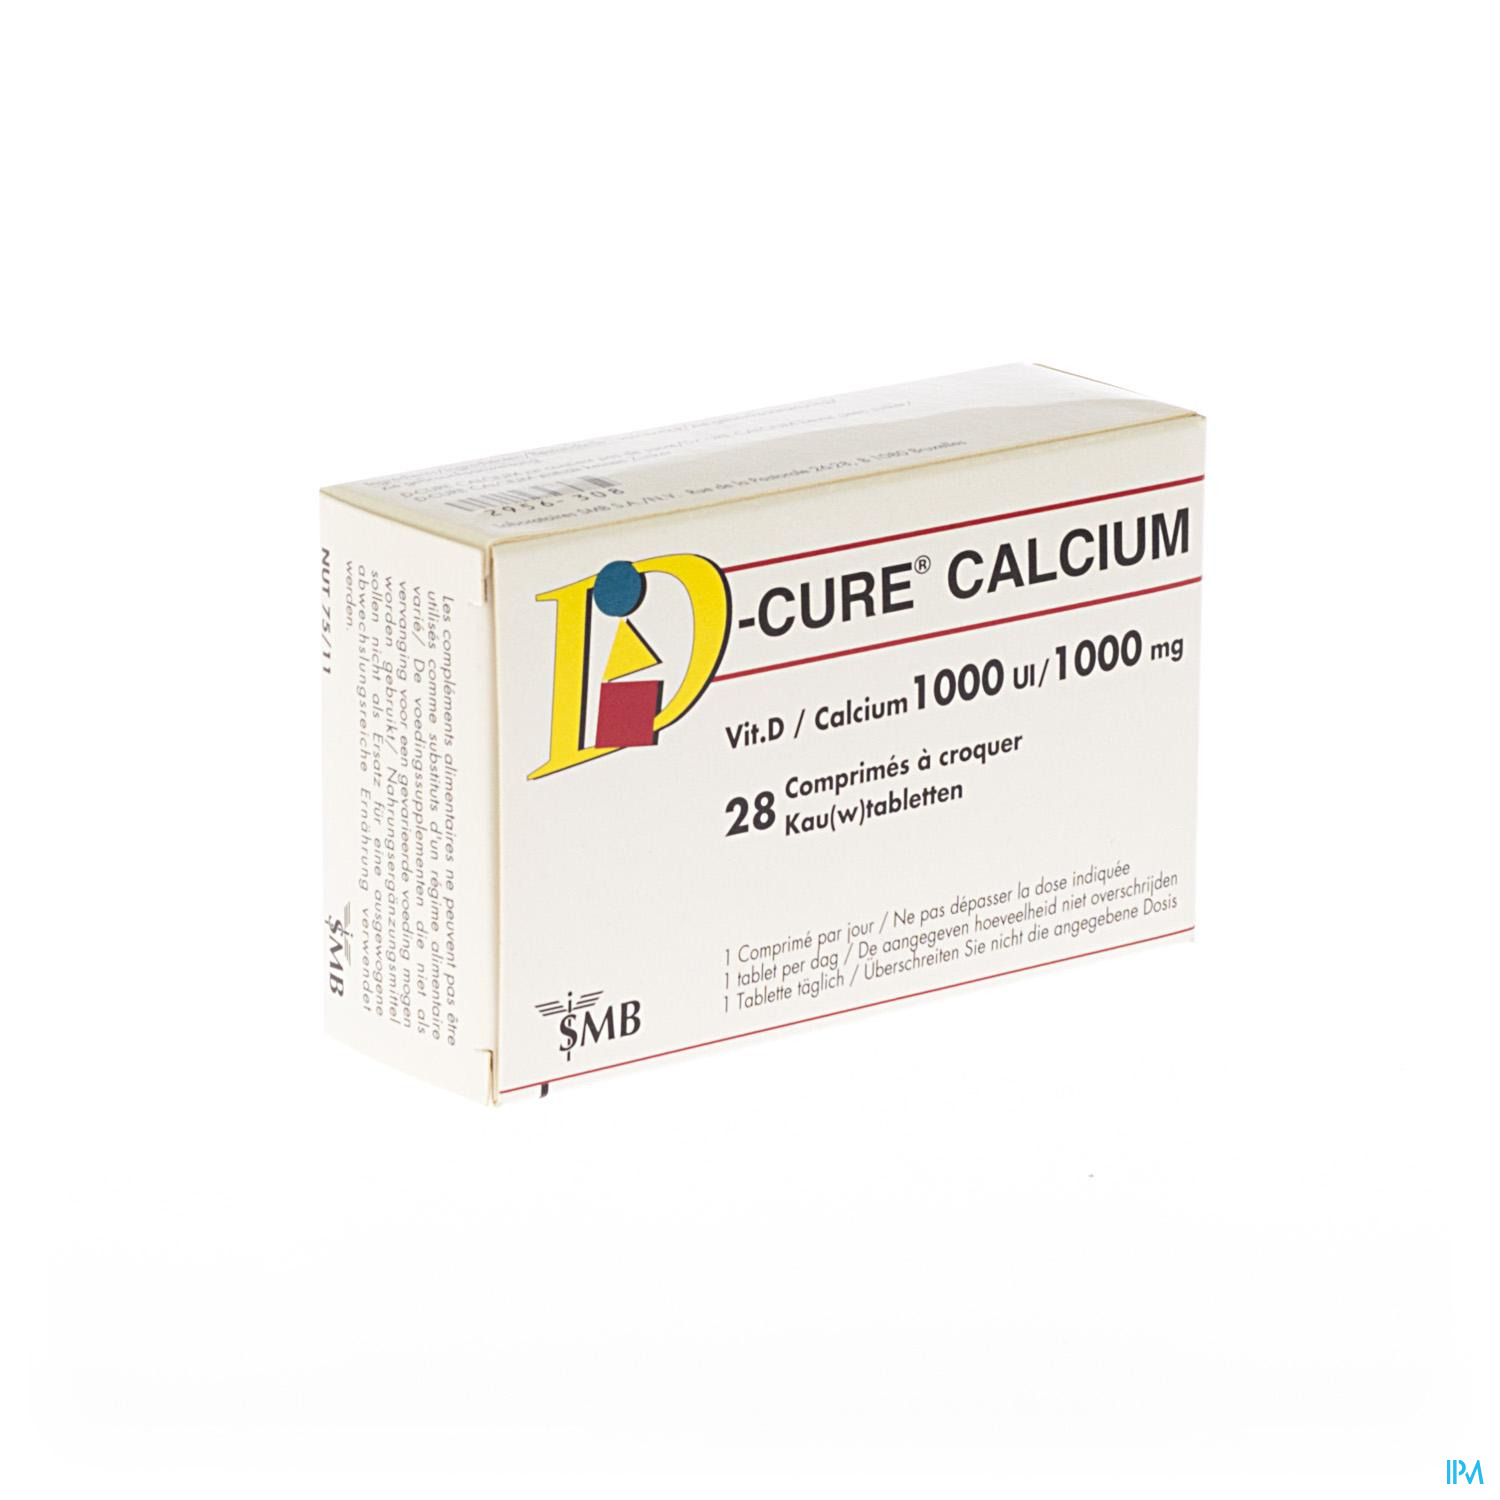 D Cure Calcium 1000mg/1000ui Kauwtabl 28